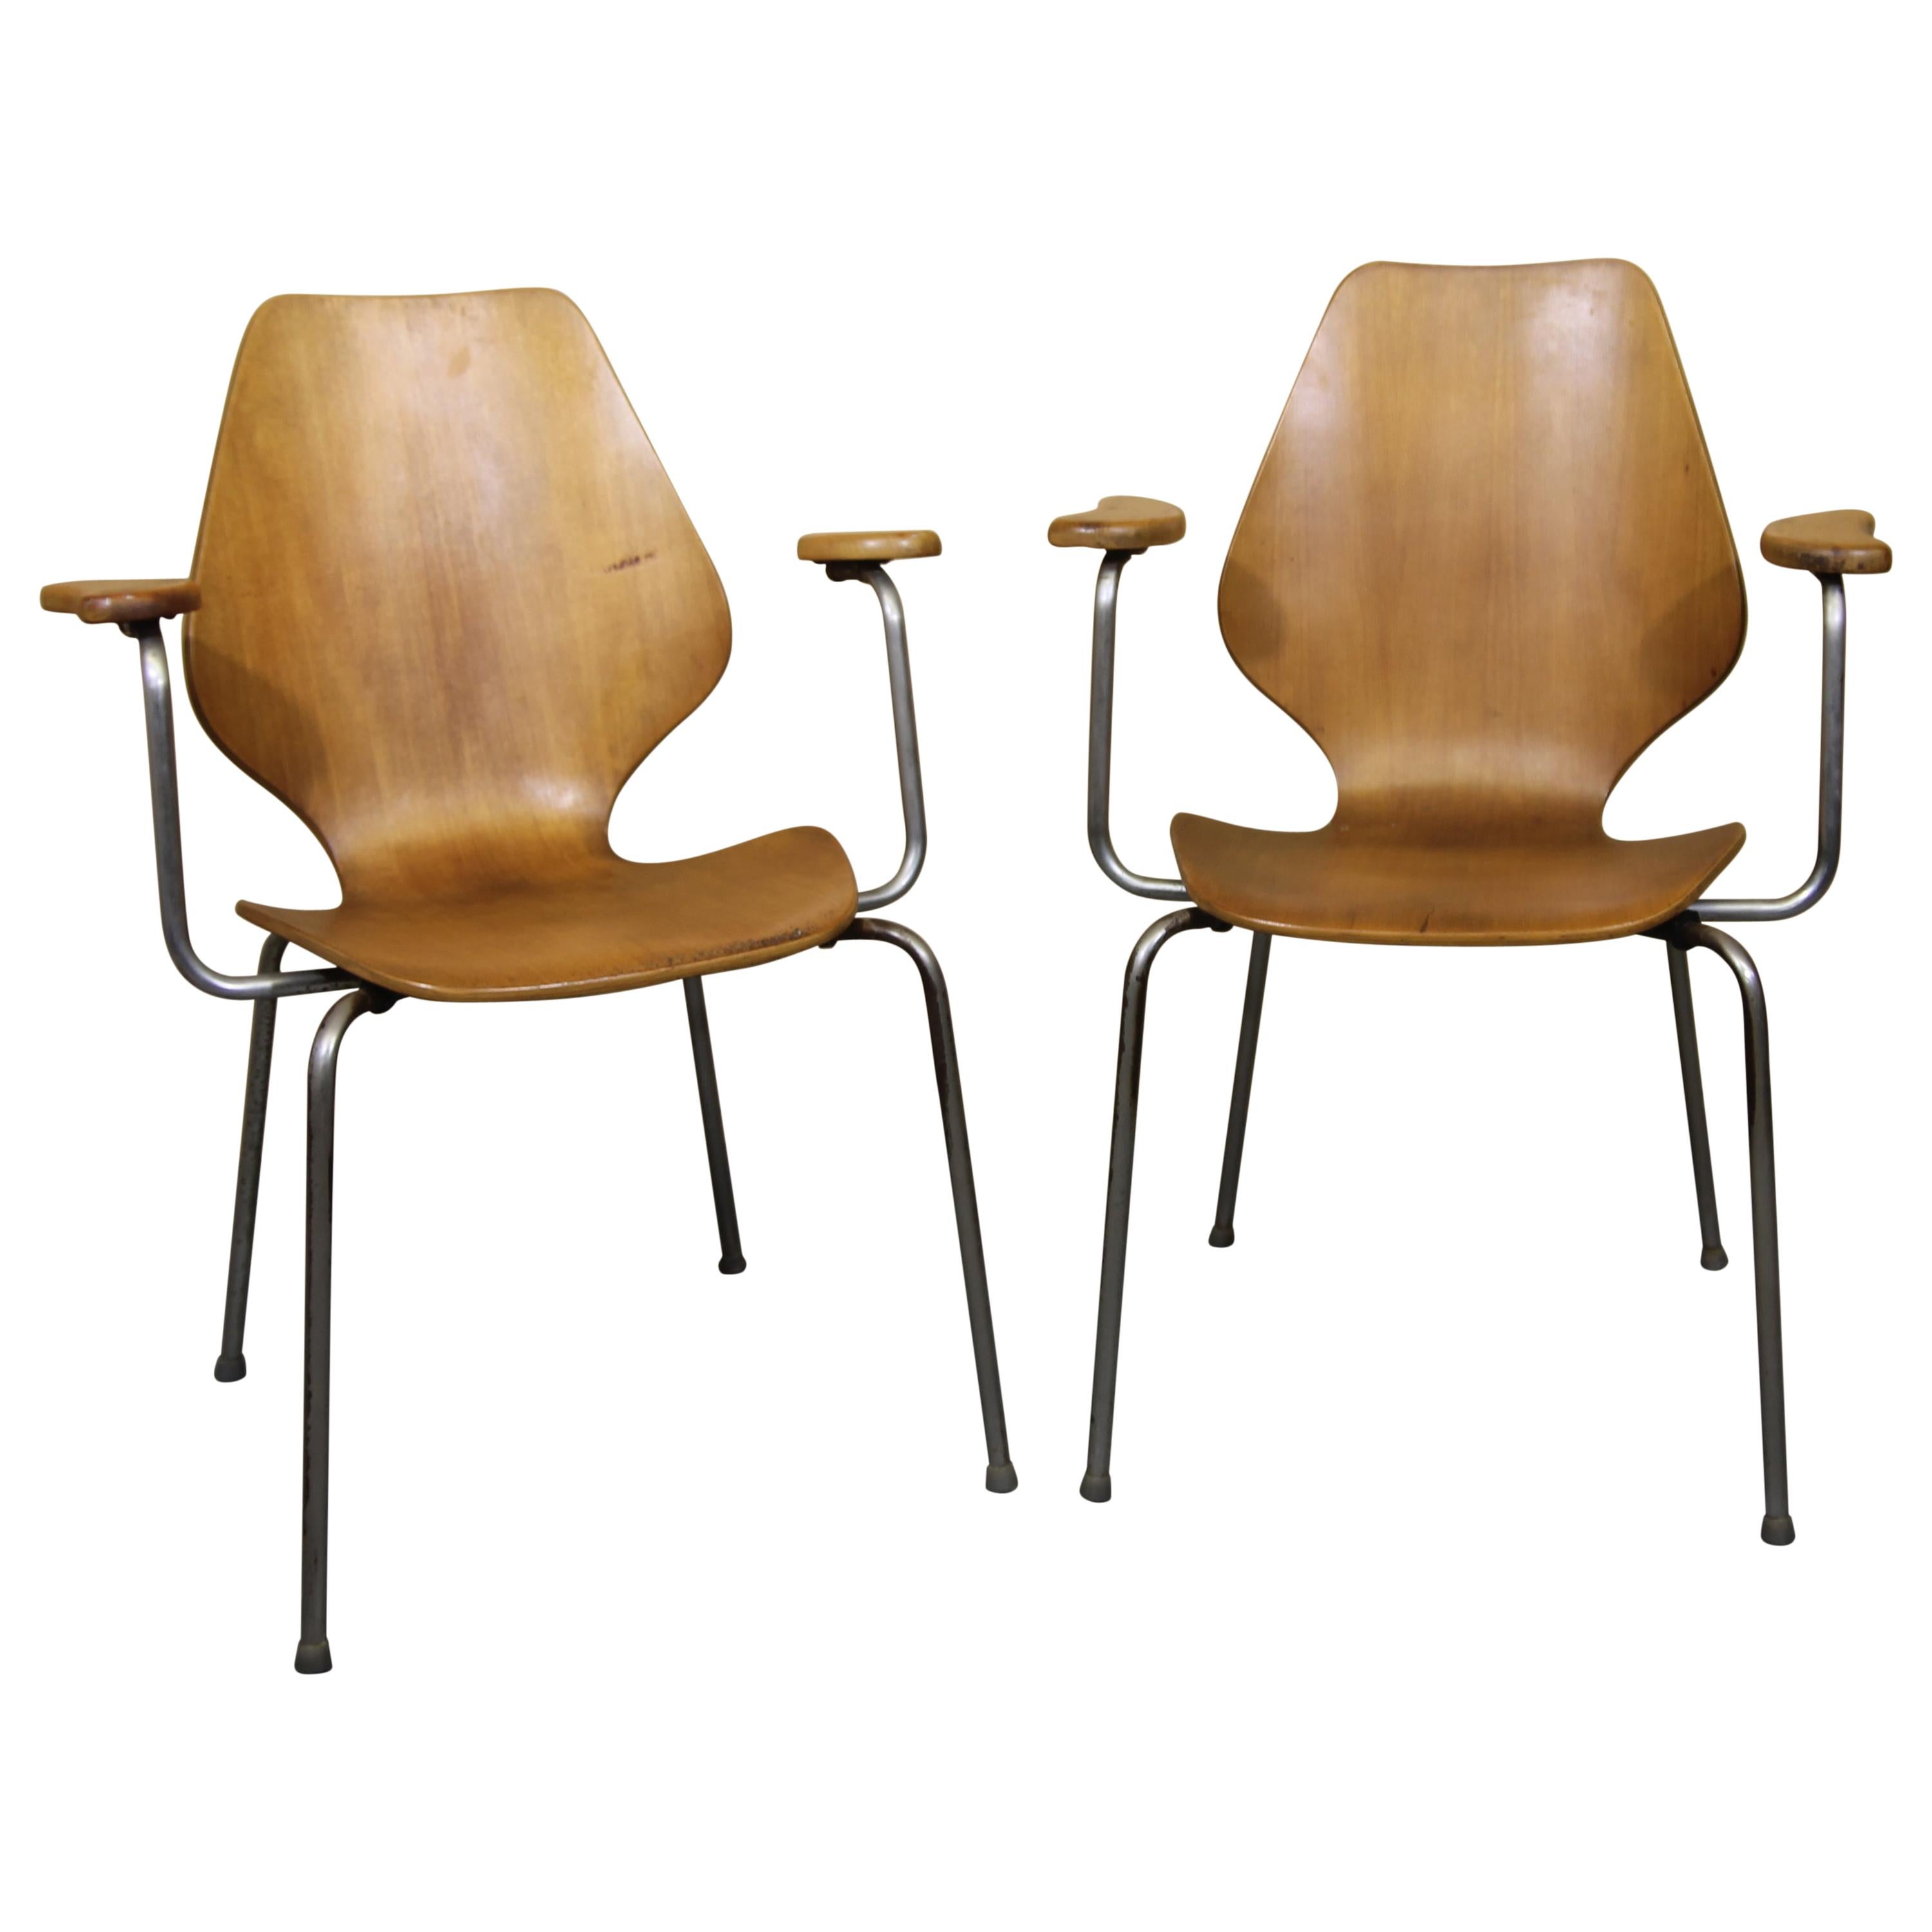 Oyvind Iversen: Sessel „City“ aus geformtem Sperrholz im Angebot